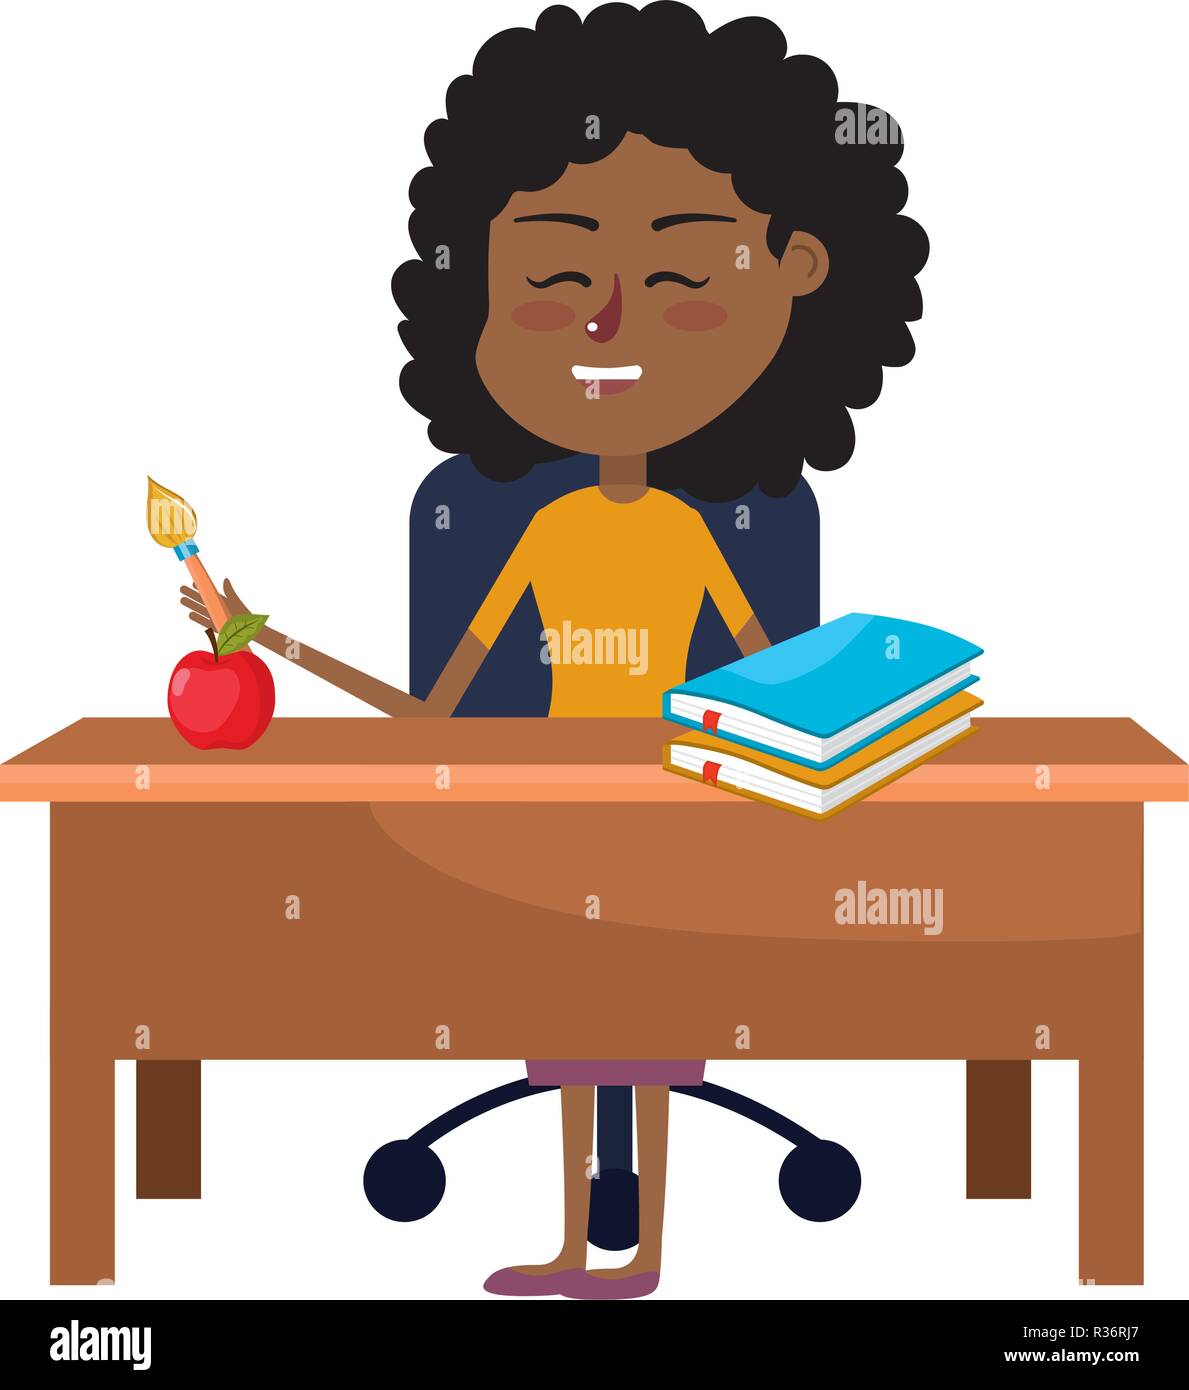 Elementary School Teacher On Desk With Books And Apple Cartoon